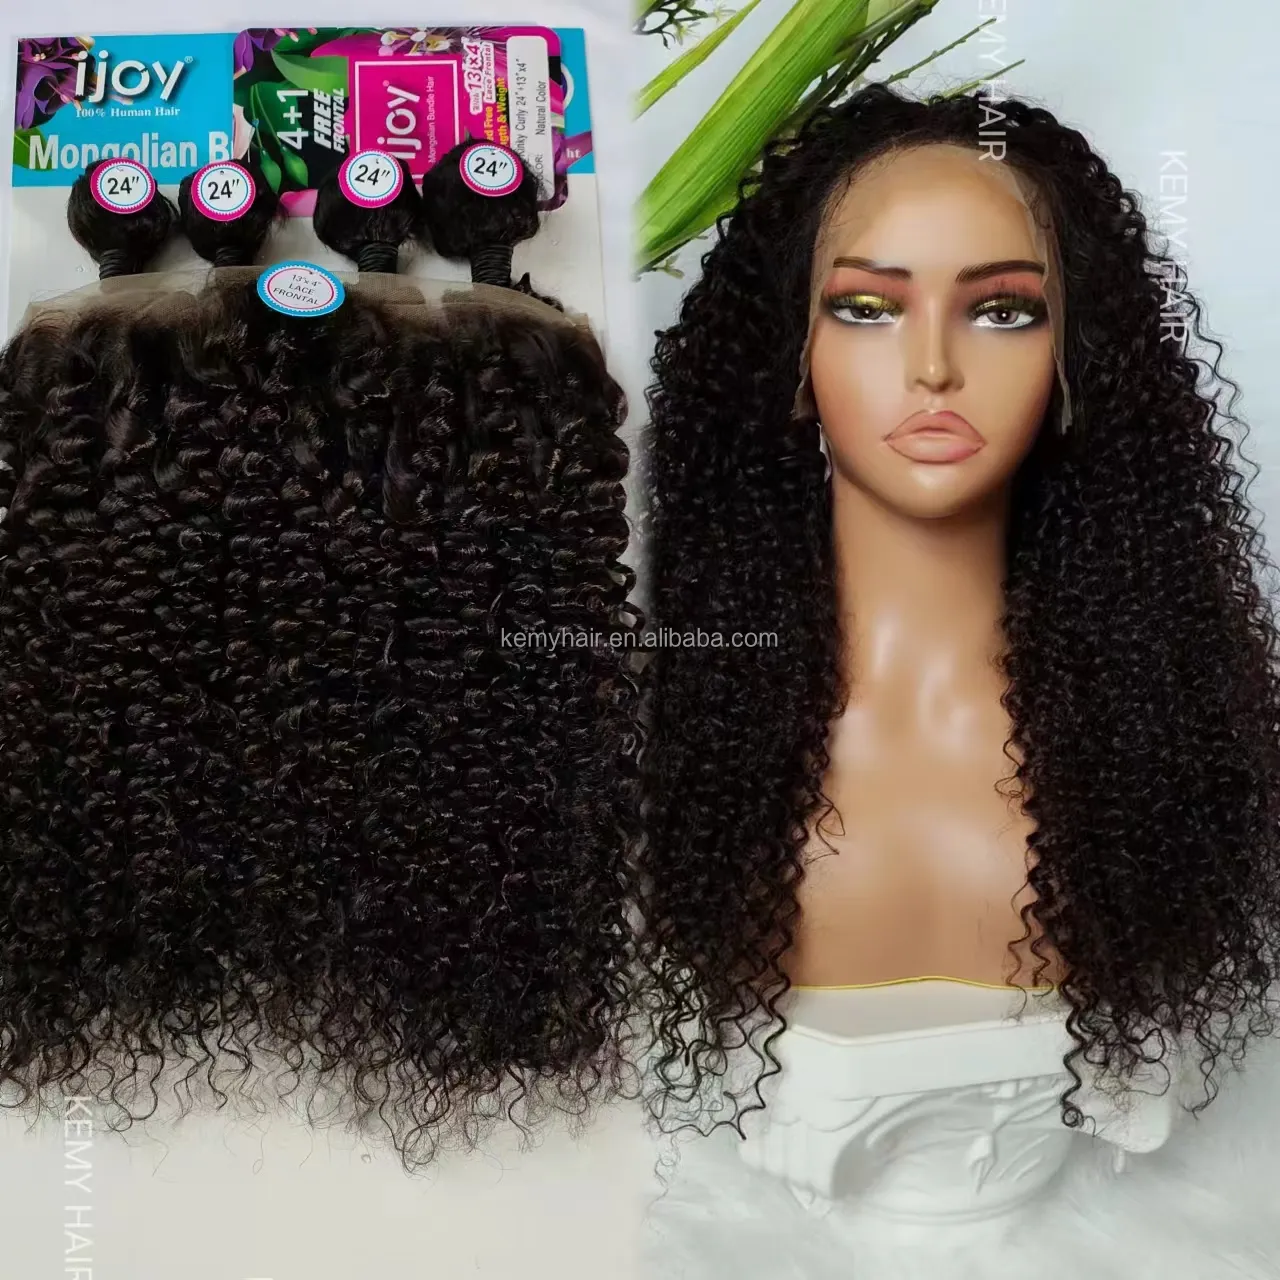 KEMY HAIR Wholesale Blend Hair Bundles Set 13*4&6*4 HD Lace Front Wigs Natural Color Human Blend Hair Wigs for Black Women